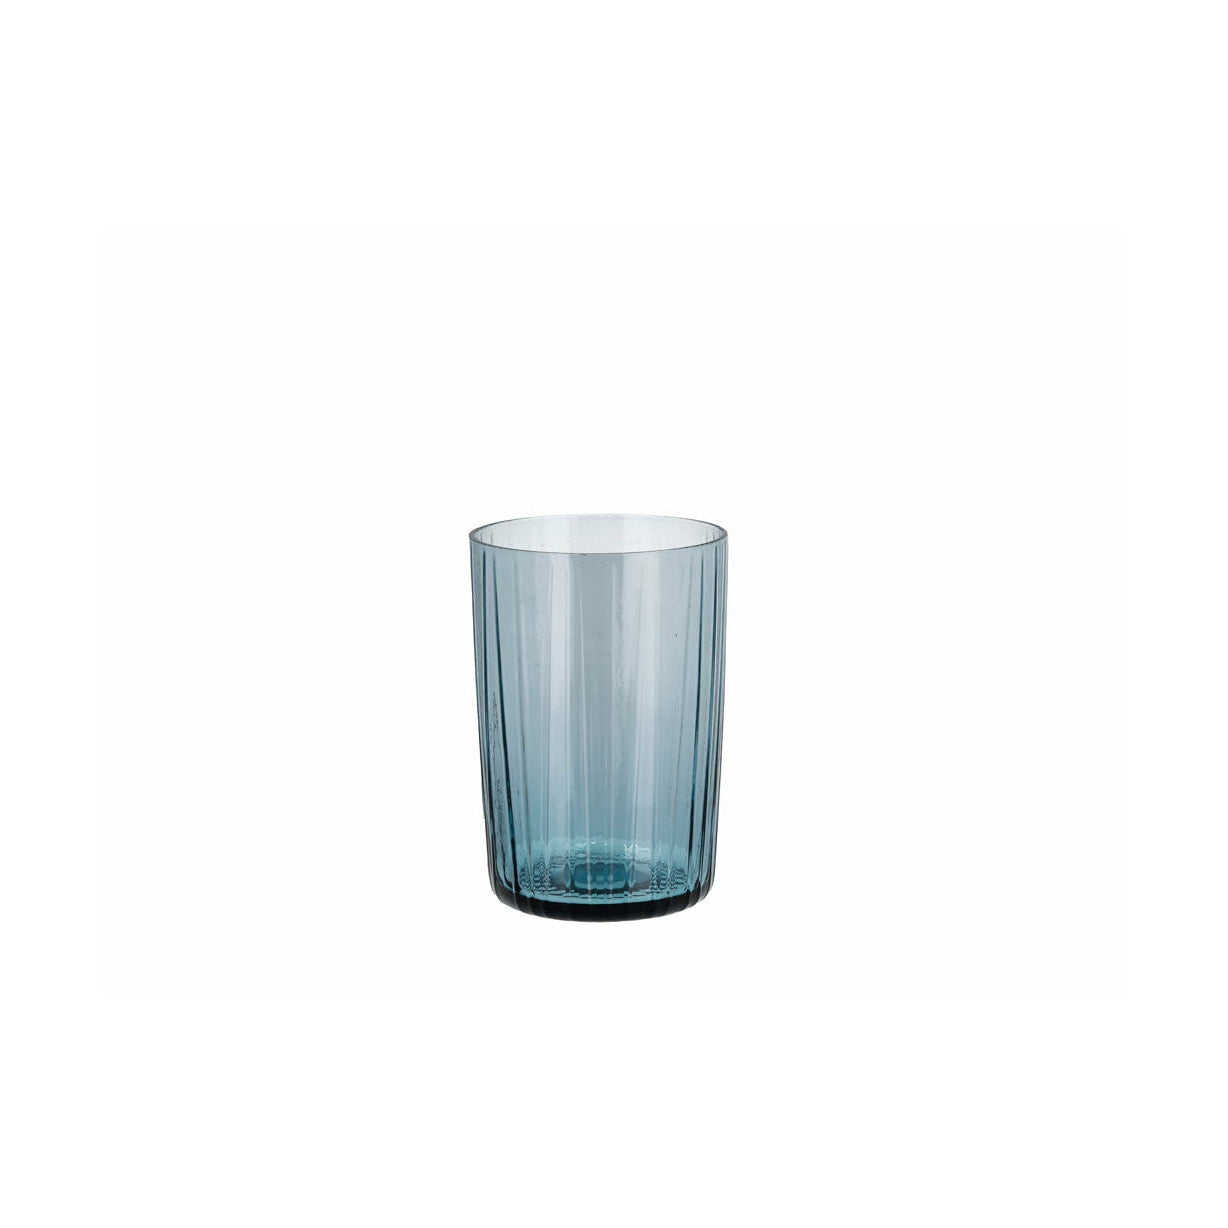 BITZ Kusintha dricker glas 28 Cl 4 st, blått